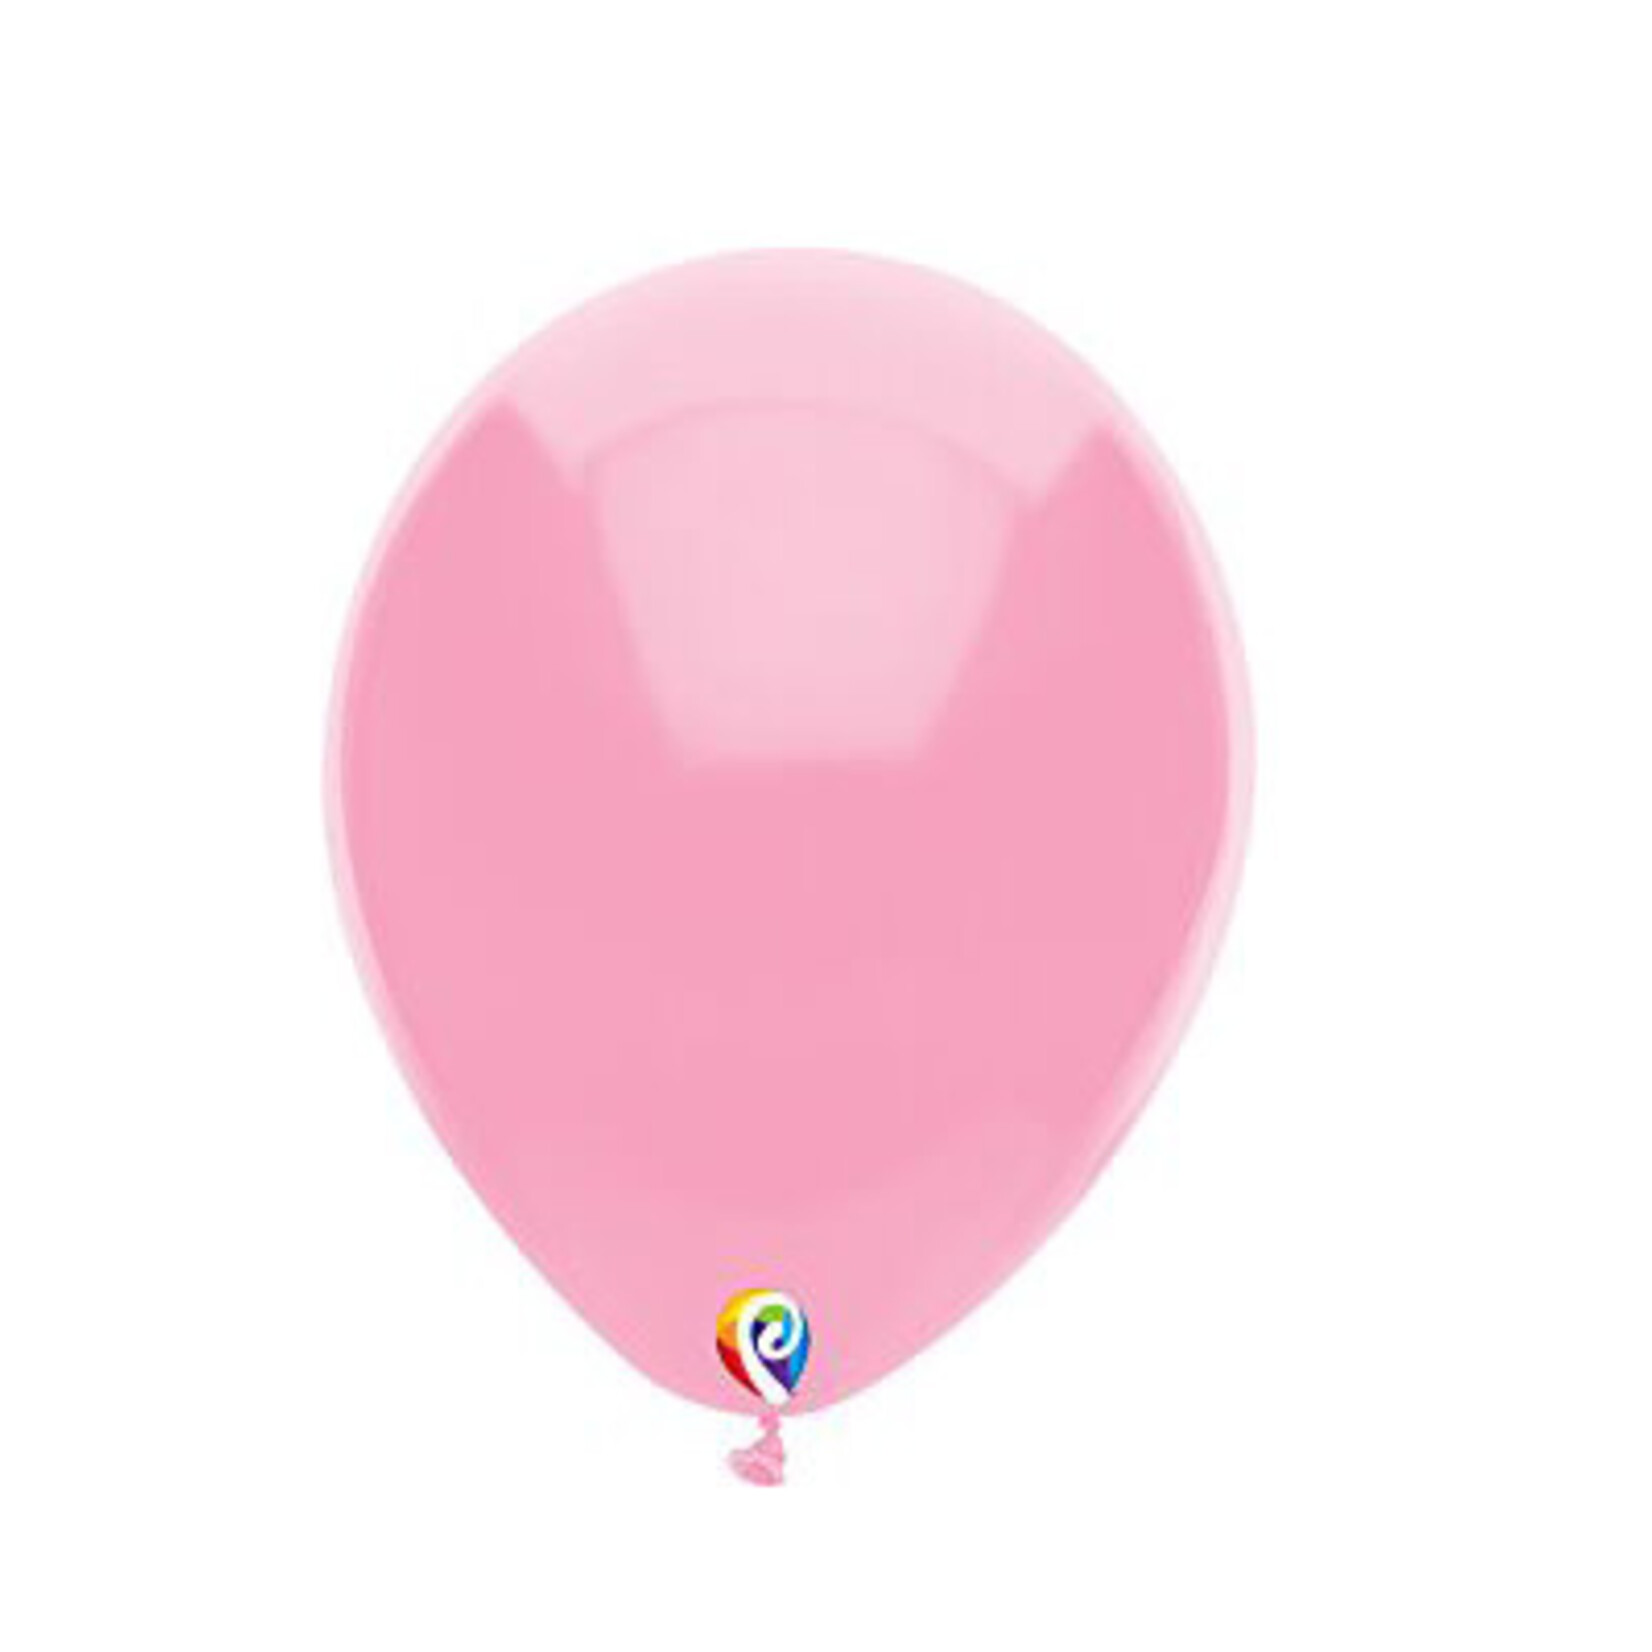 Funsational 12" Pink Funsational Latex Balloons - 50ct.